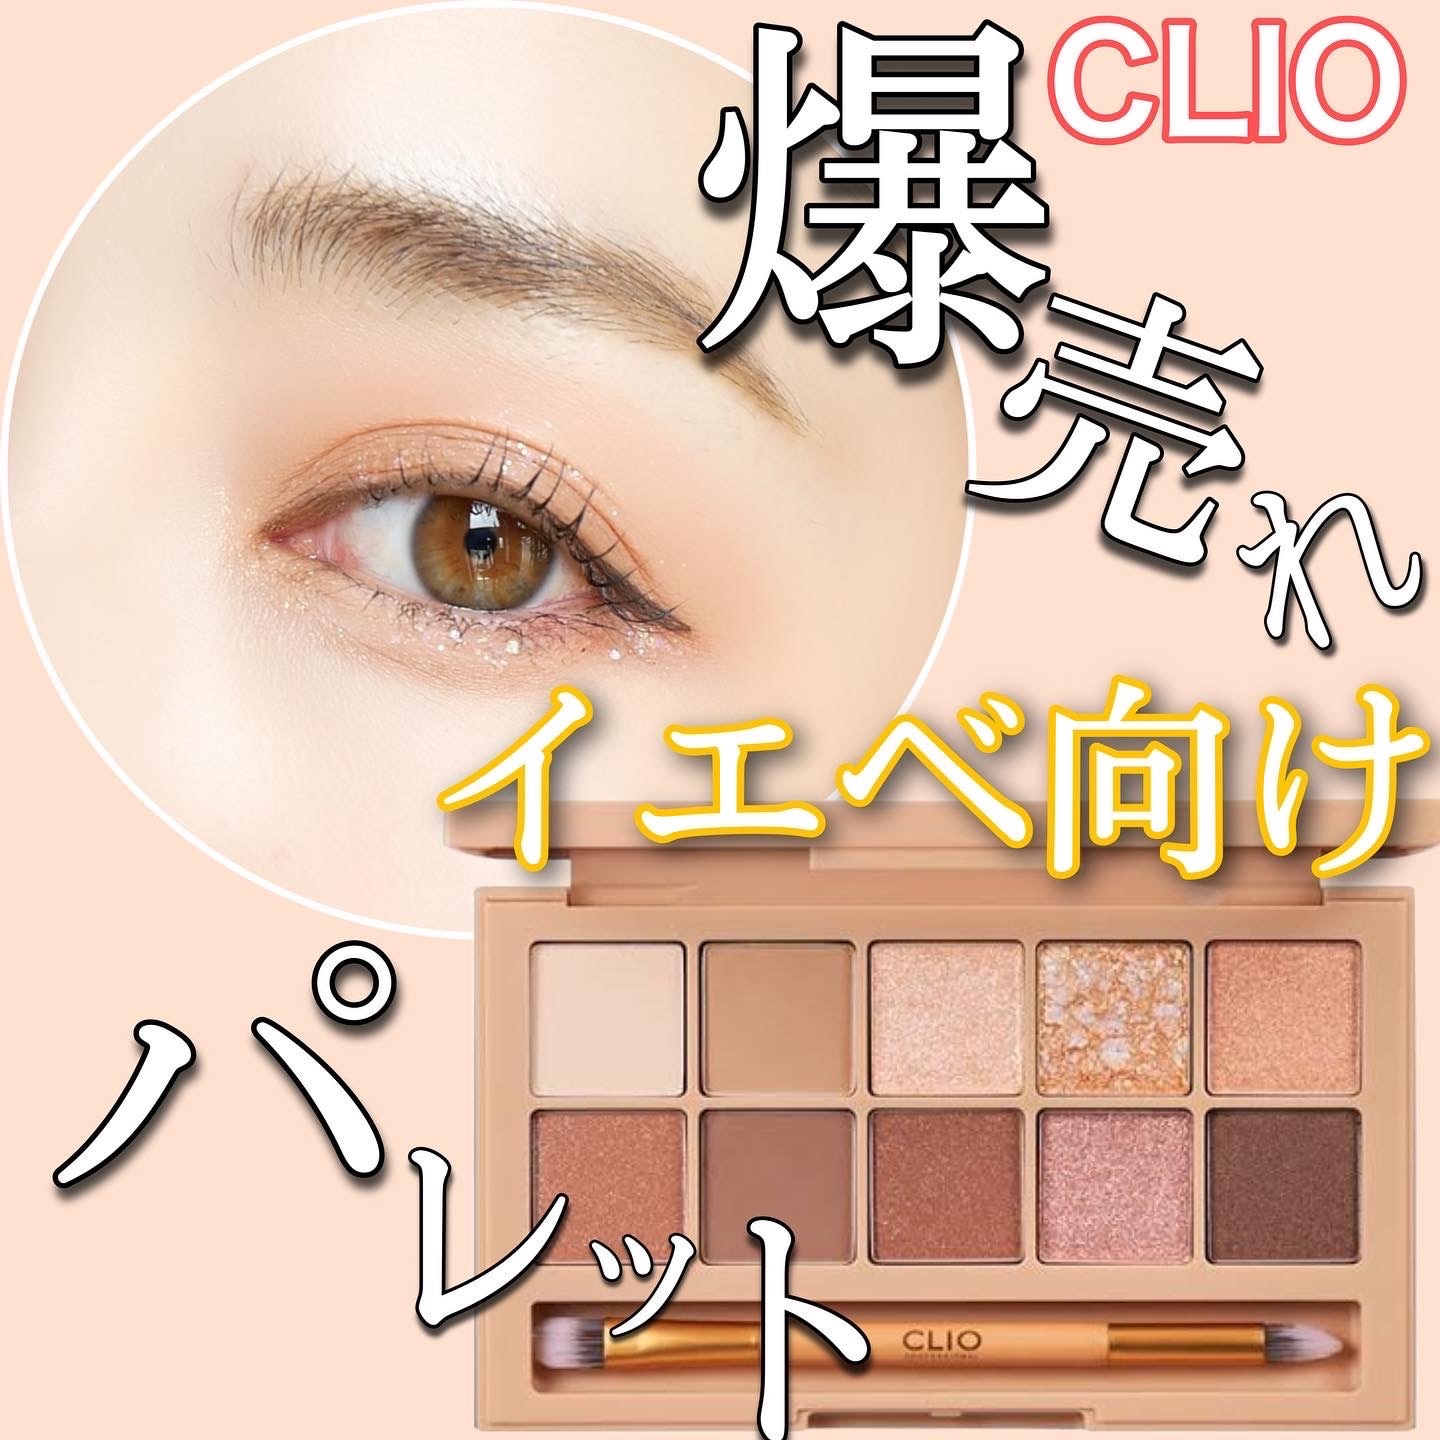 CLIO】【クリオ】プロ アイパレット 02 CLIO Pro Eye Palette 02 BROWN